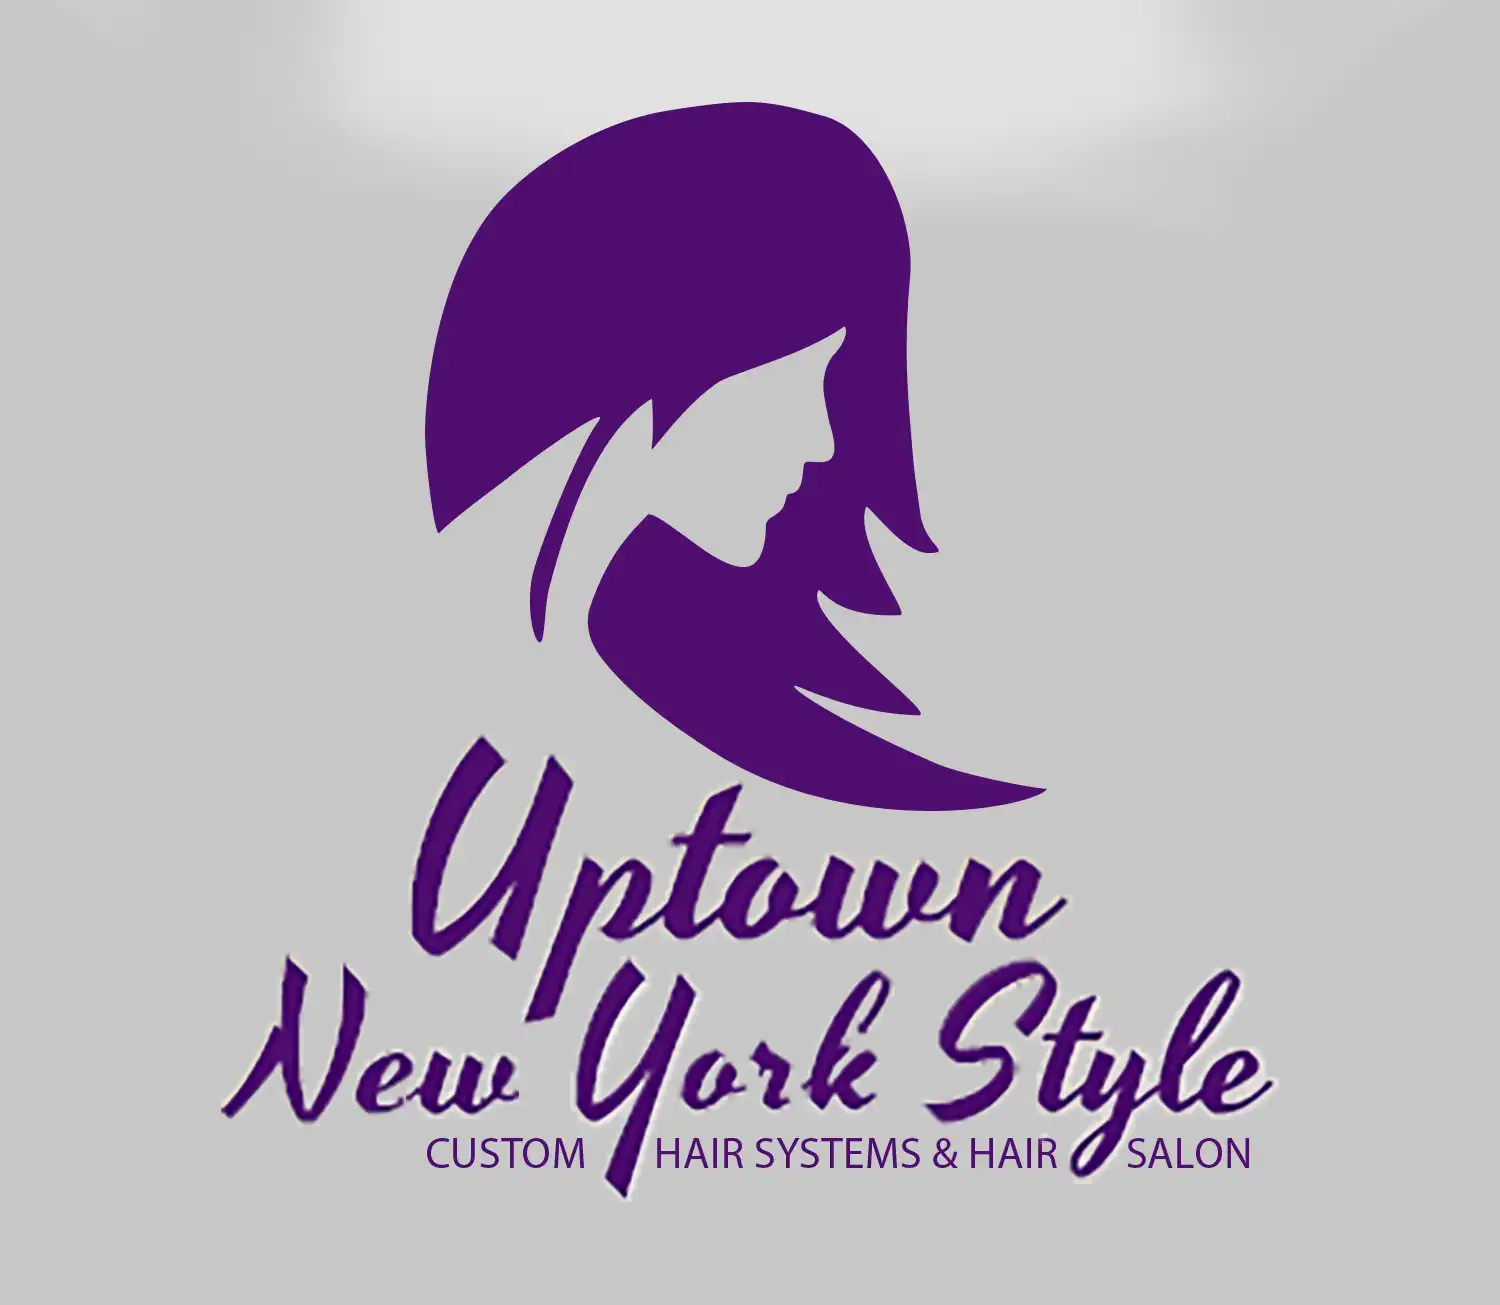 Uptown New York Style Hair Salon